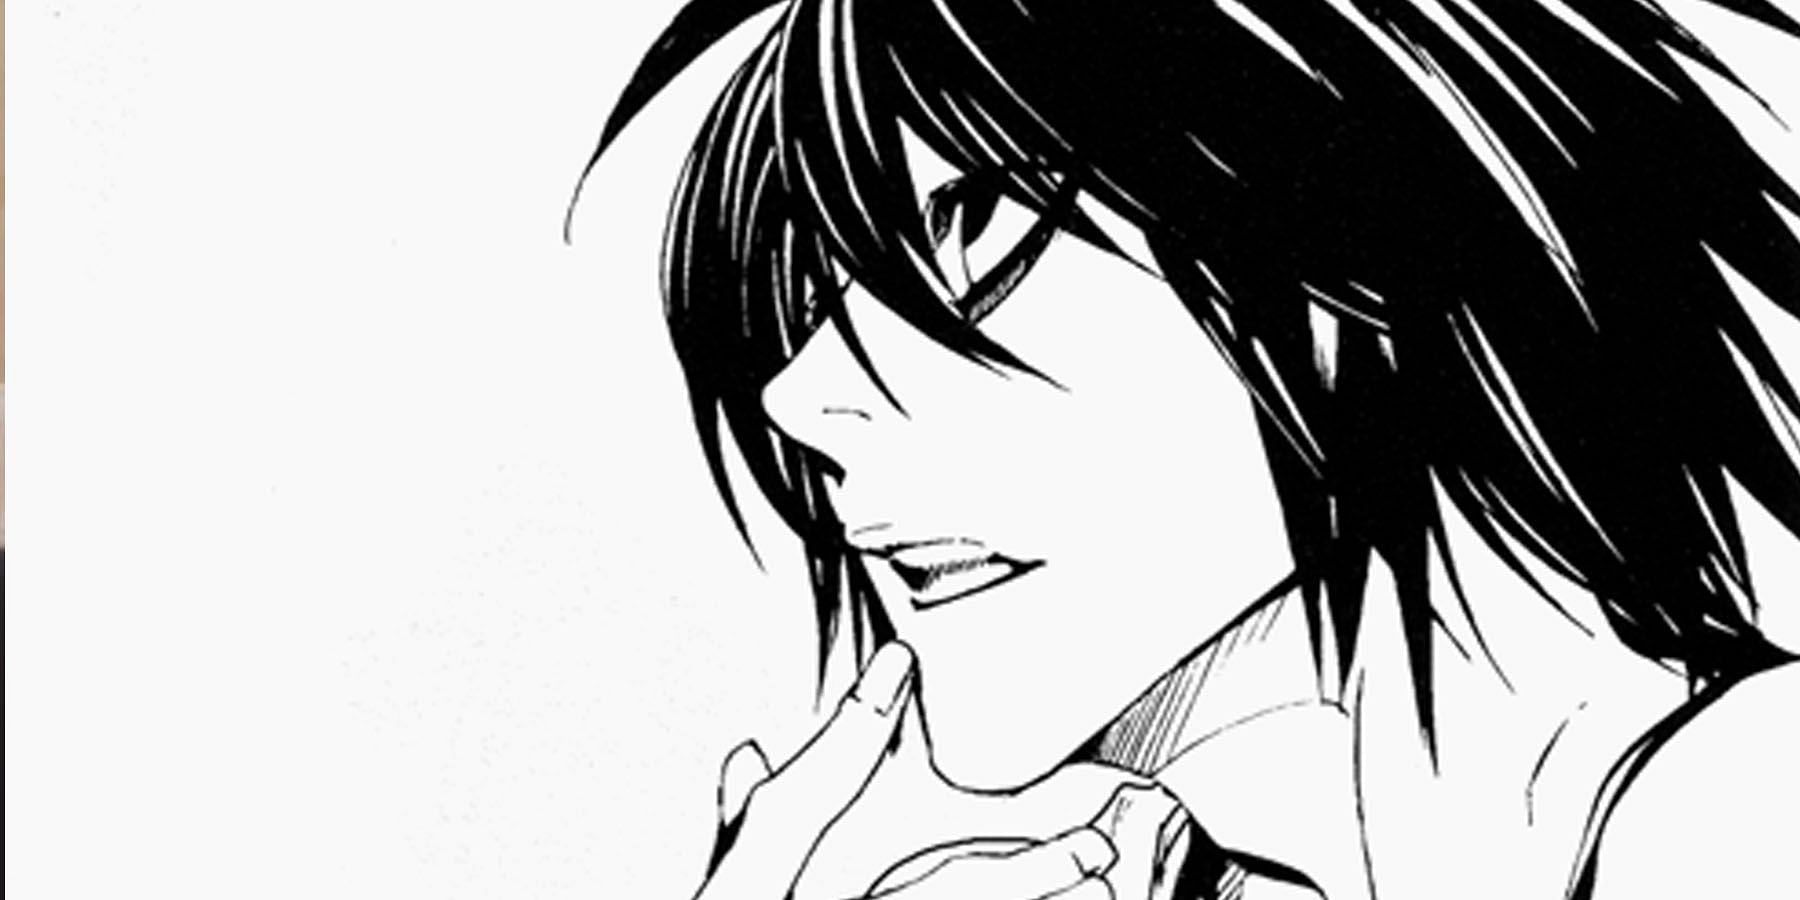 L as seen in Death Note manga (Image via Shueisha)